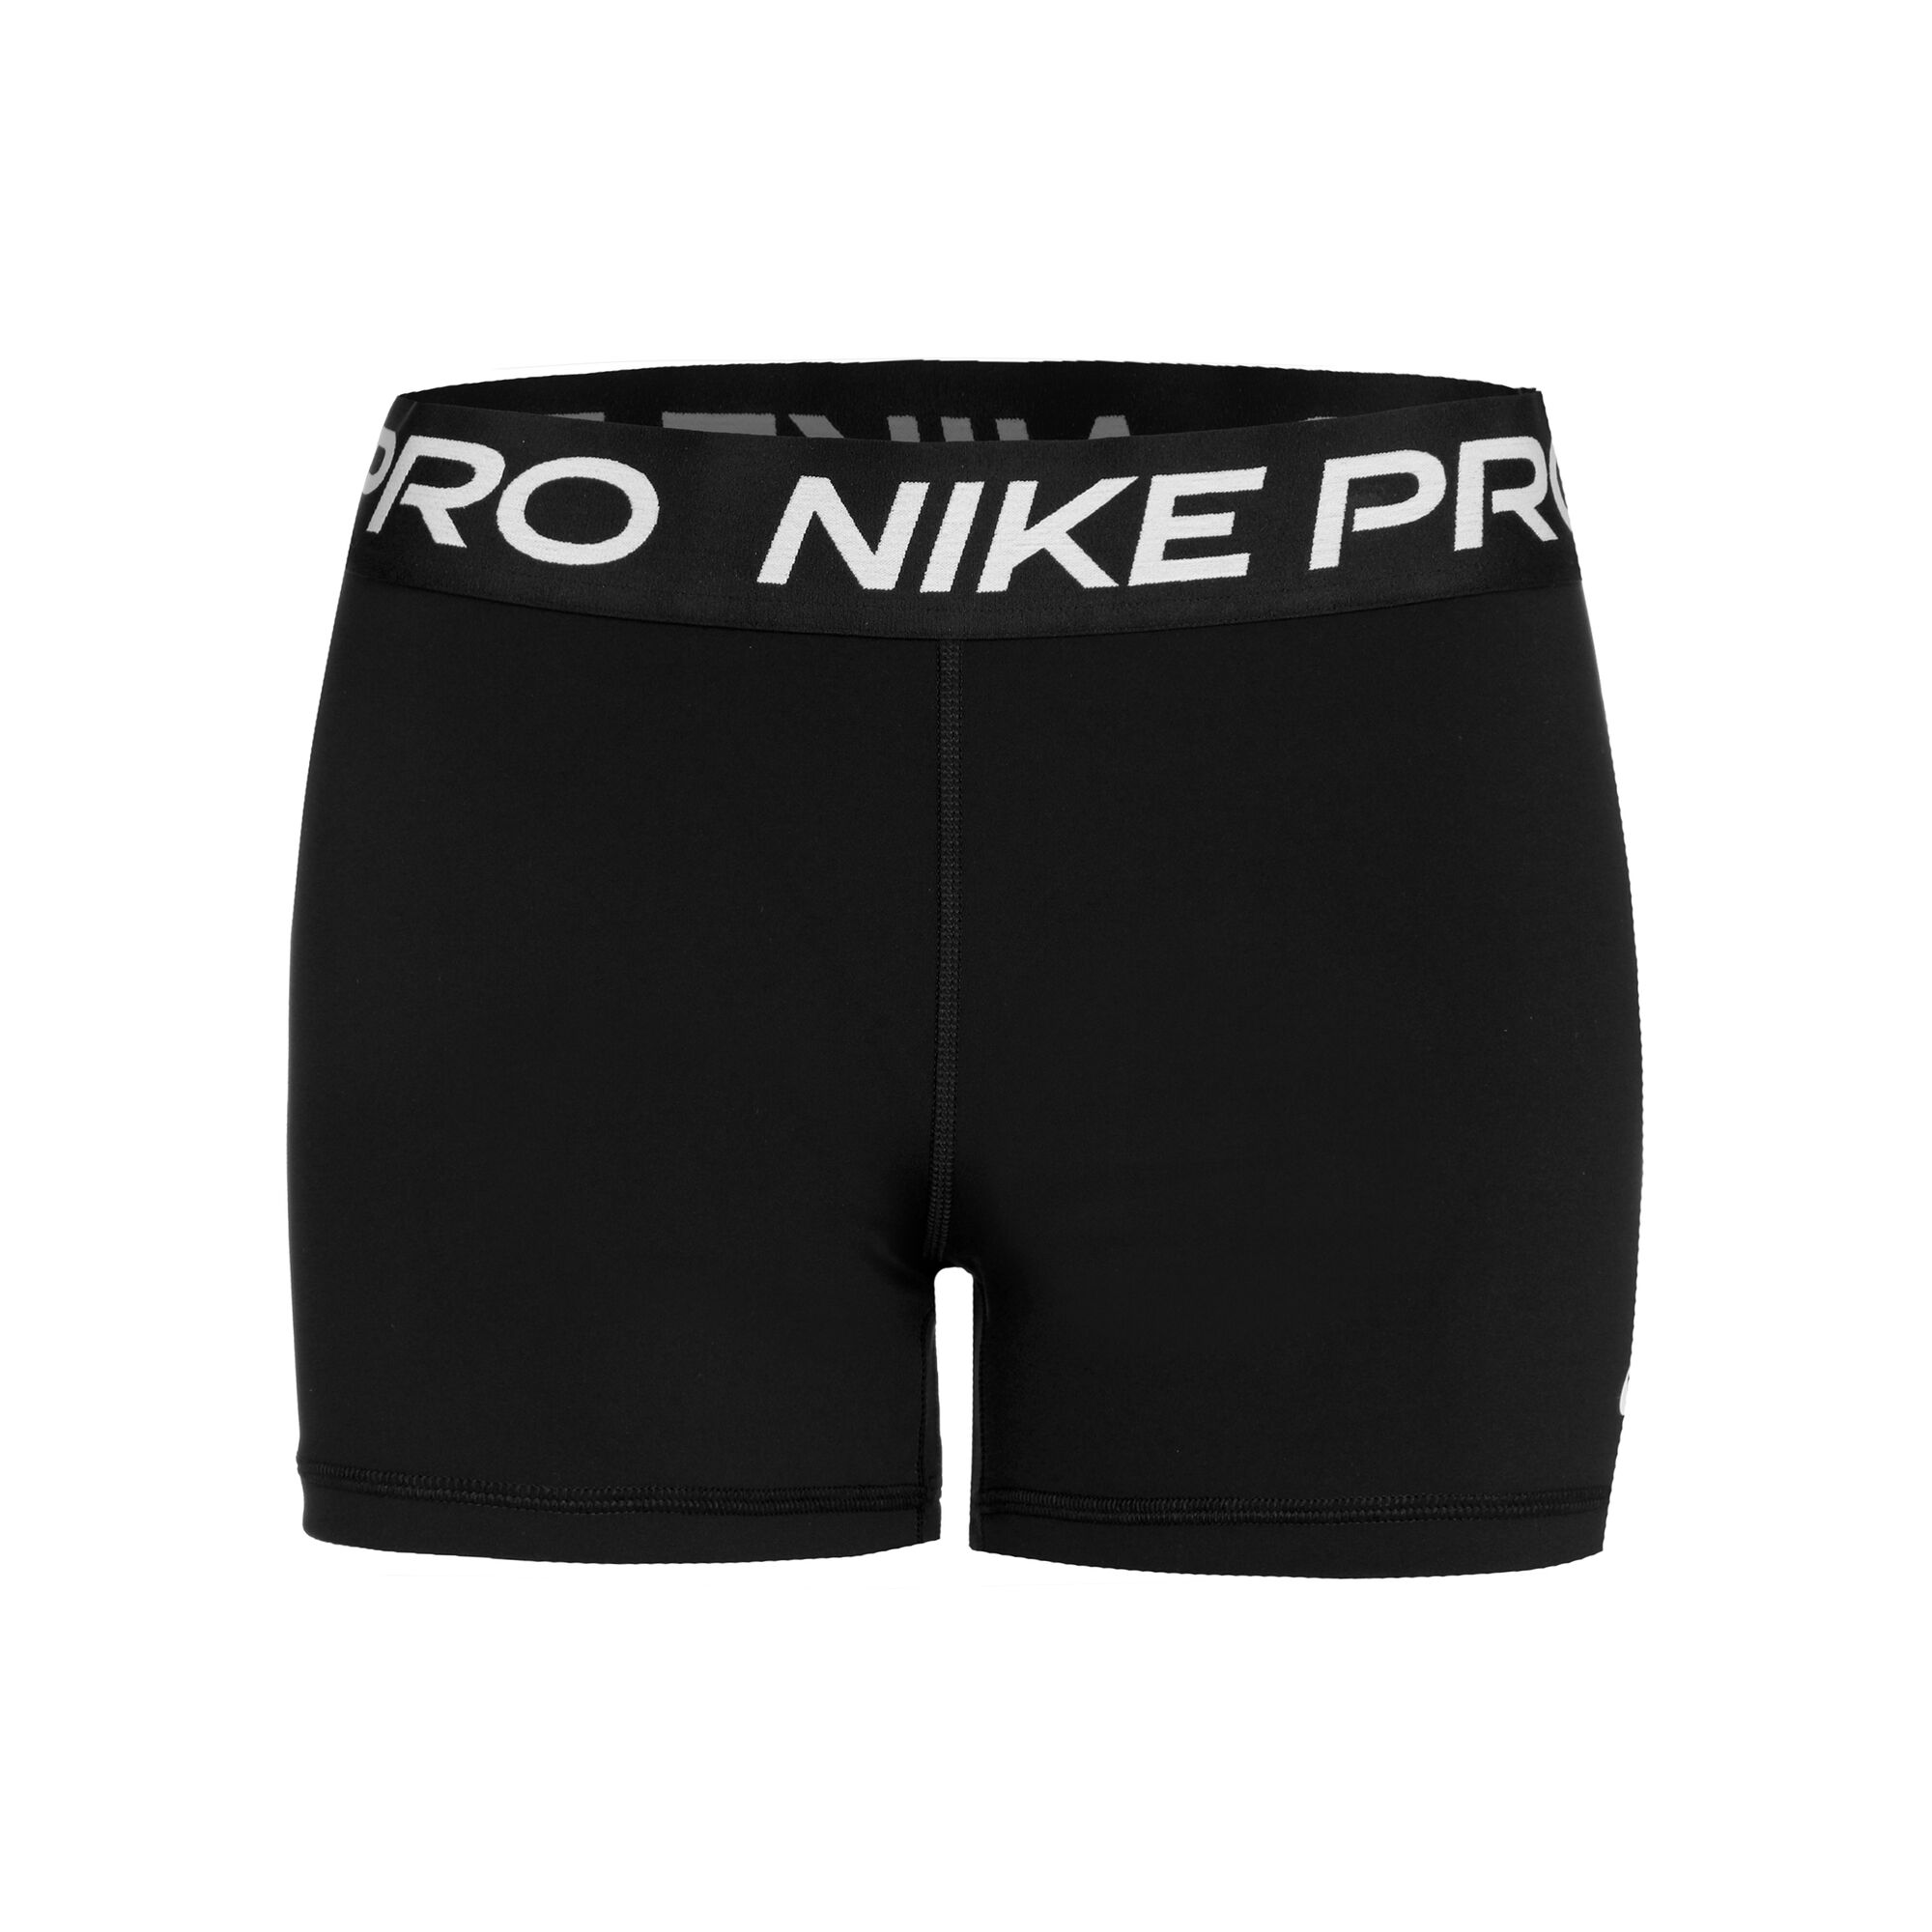 Womens Nike Pro Compression Pants Dri Fit Size XS Just Do It Pattern